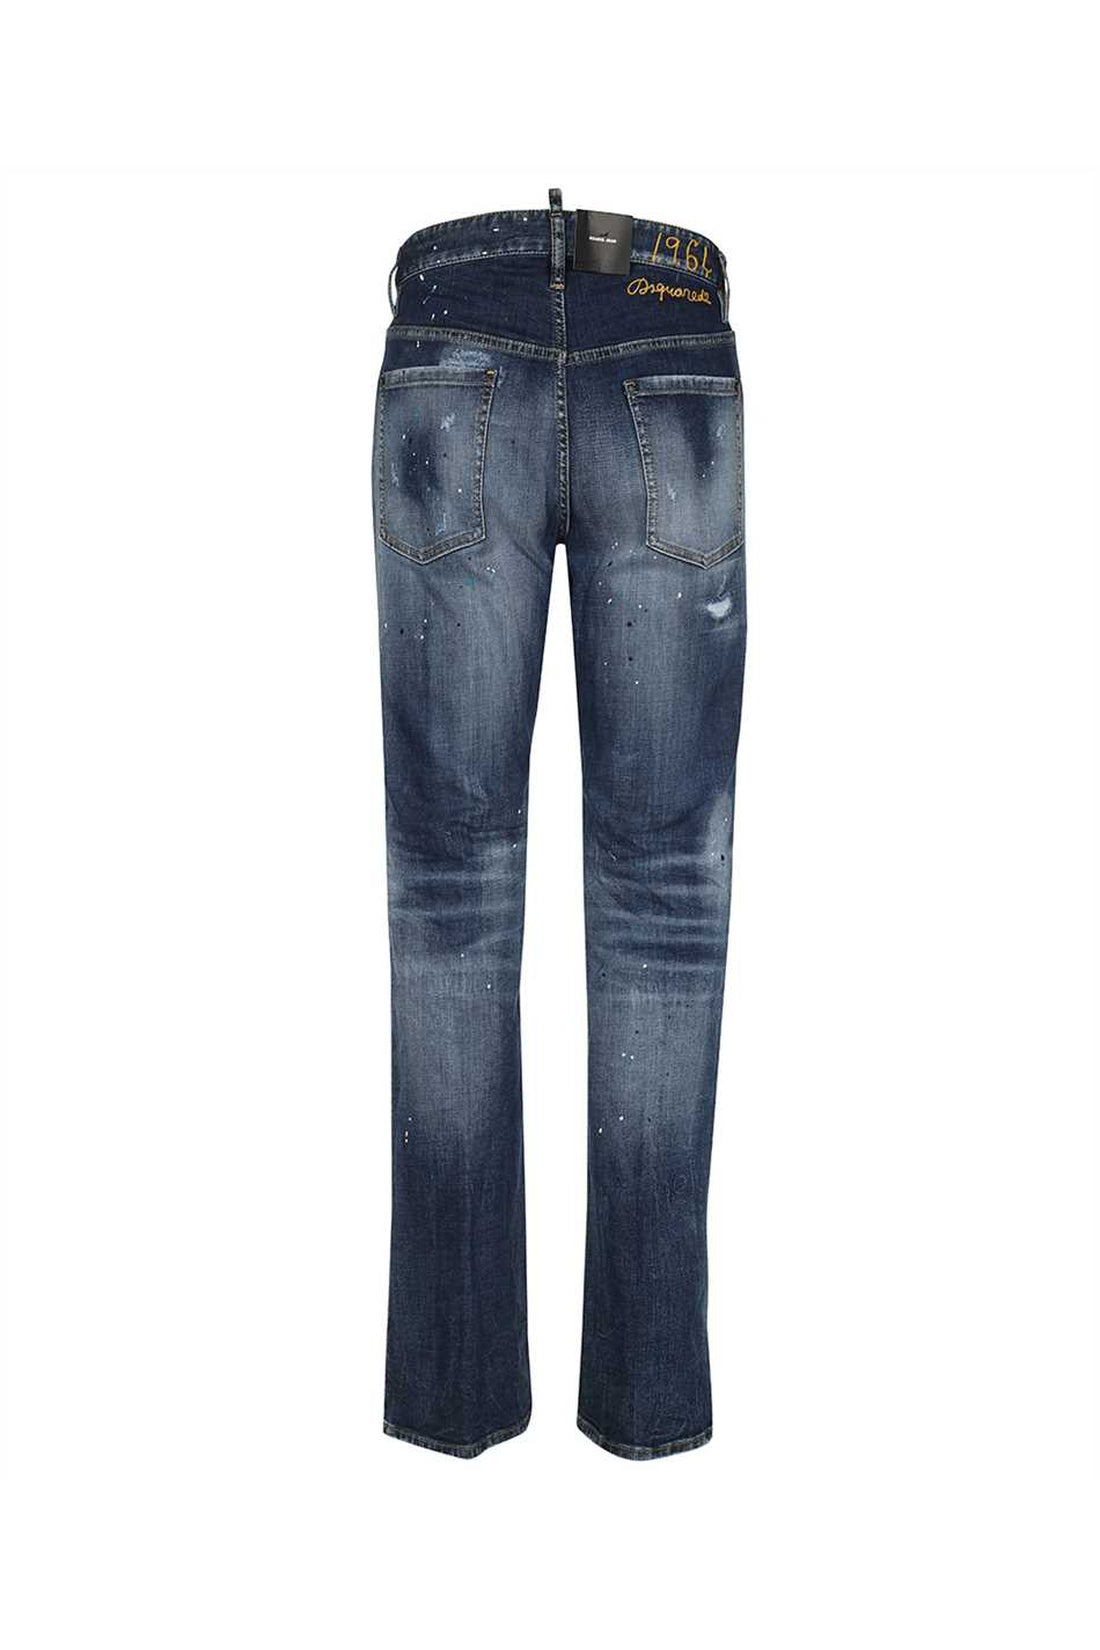 Dsquared2-OUTLET-SALE-Roadie 5-pocket jeans-ARCHIVIST